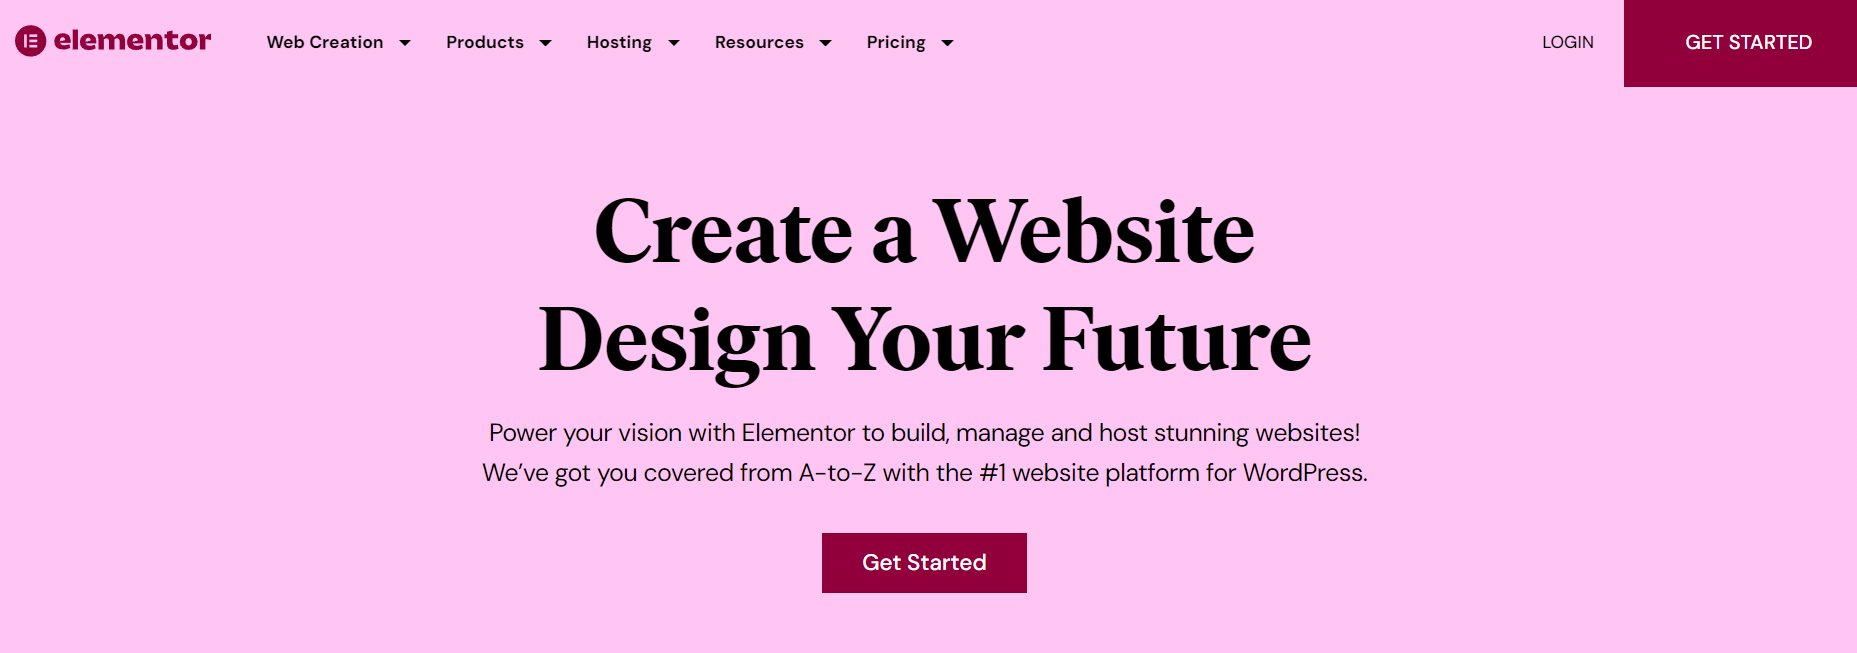 website builder with ai software elementor